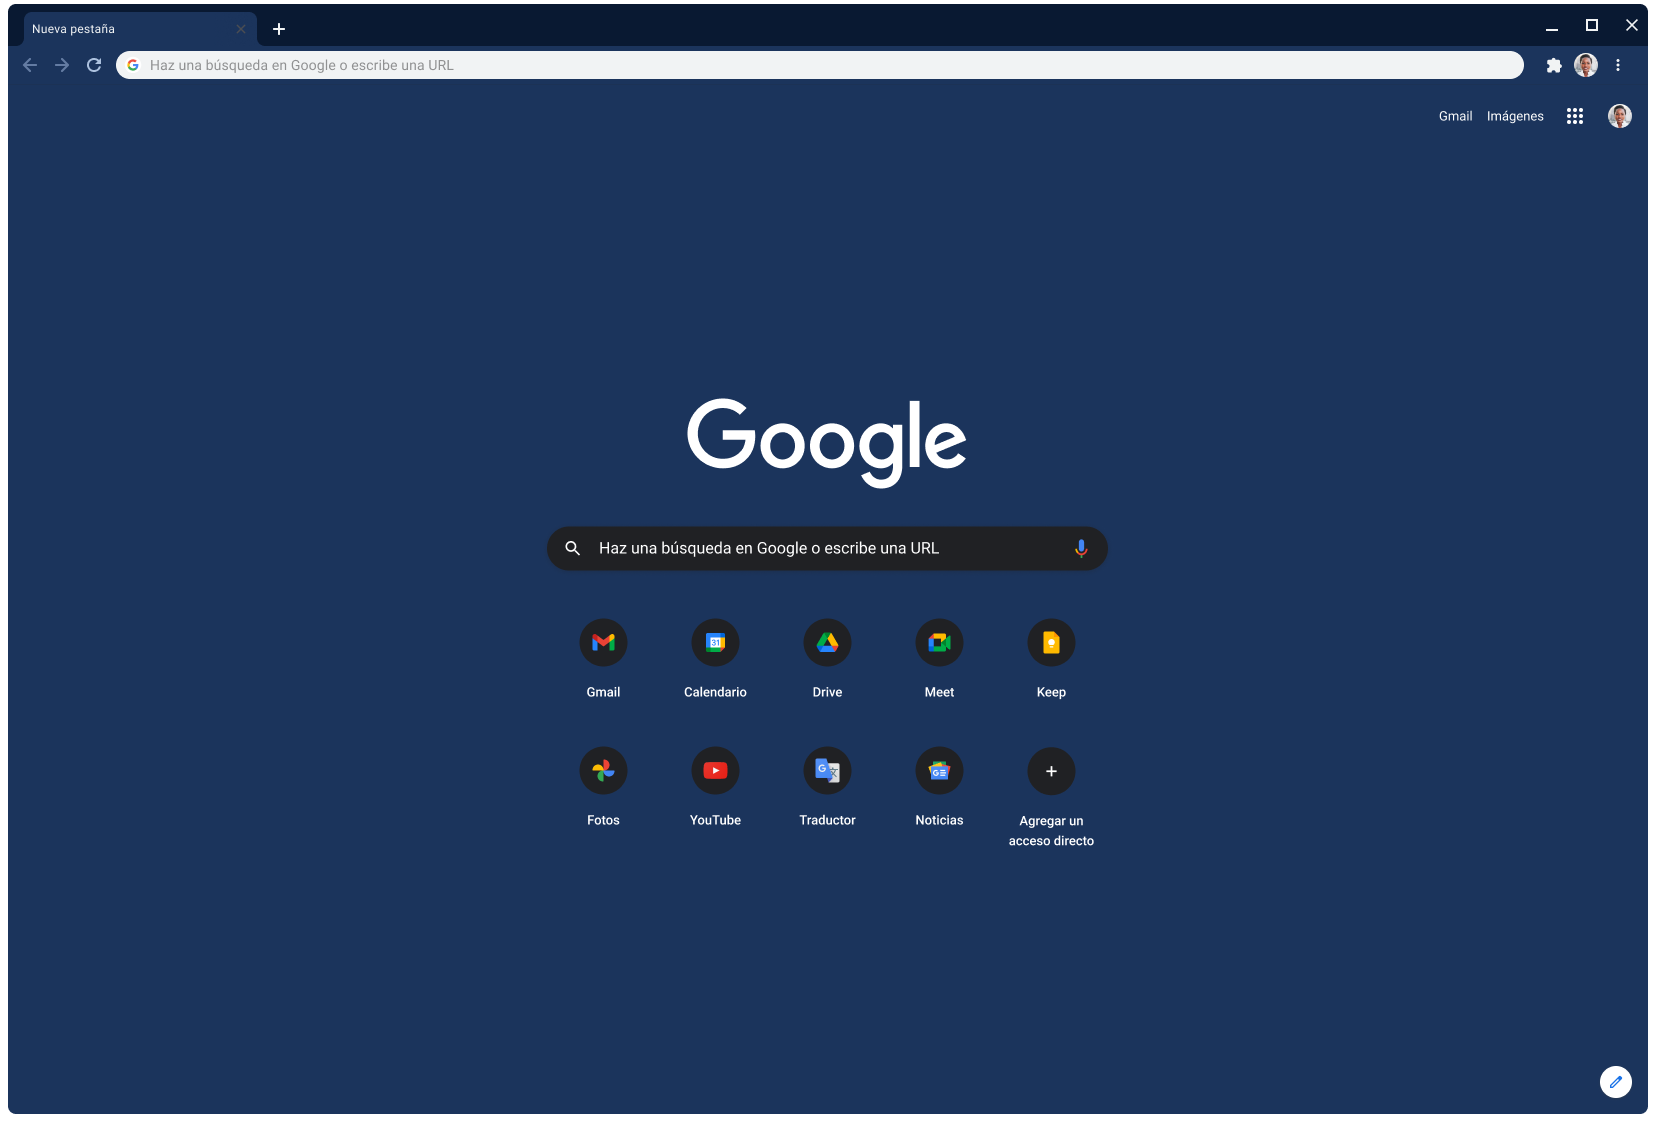 Ventana del navegador Chrome que muestra Google.com, con el tema gris oscuro.